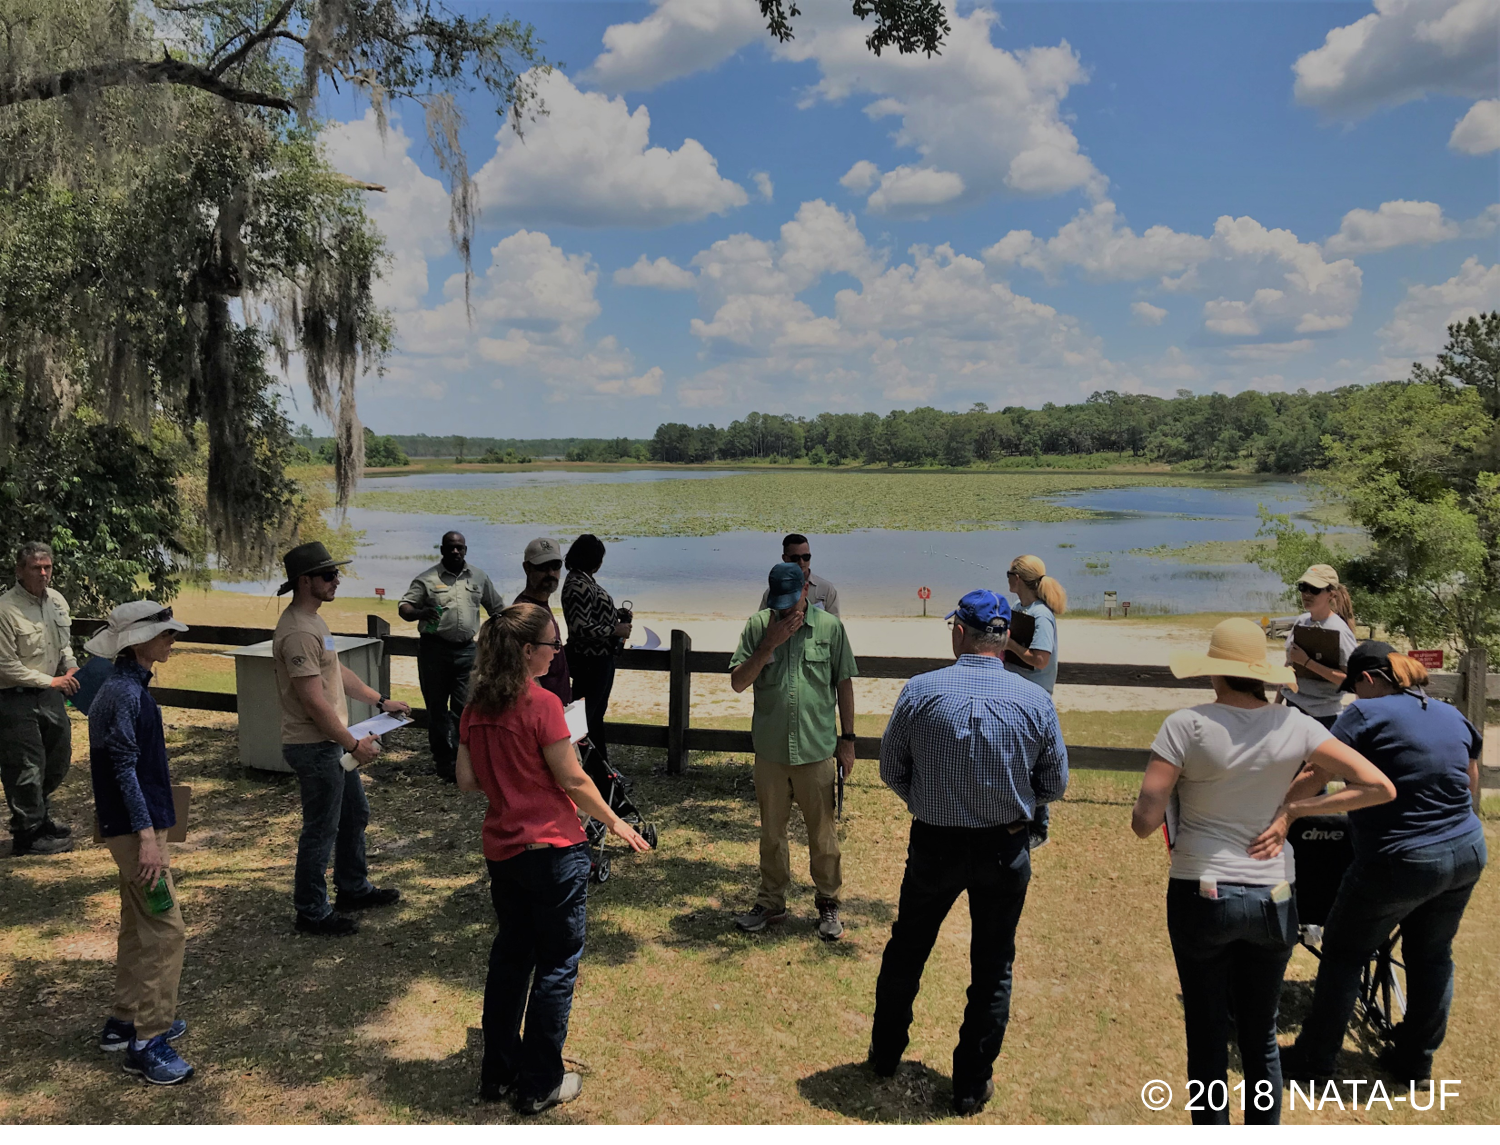 Students gathering around a lake.